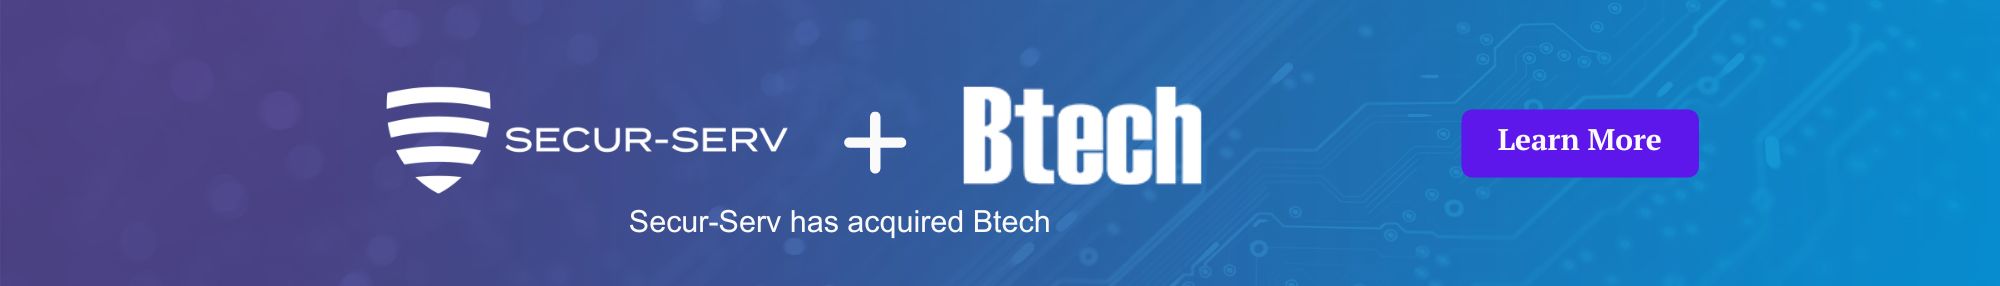 btech_aquisition